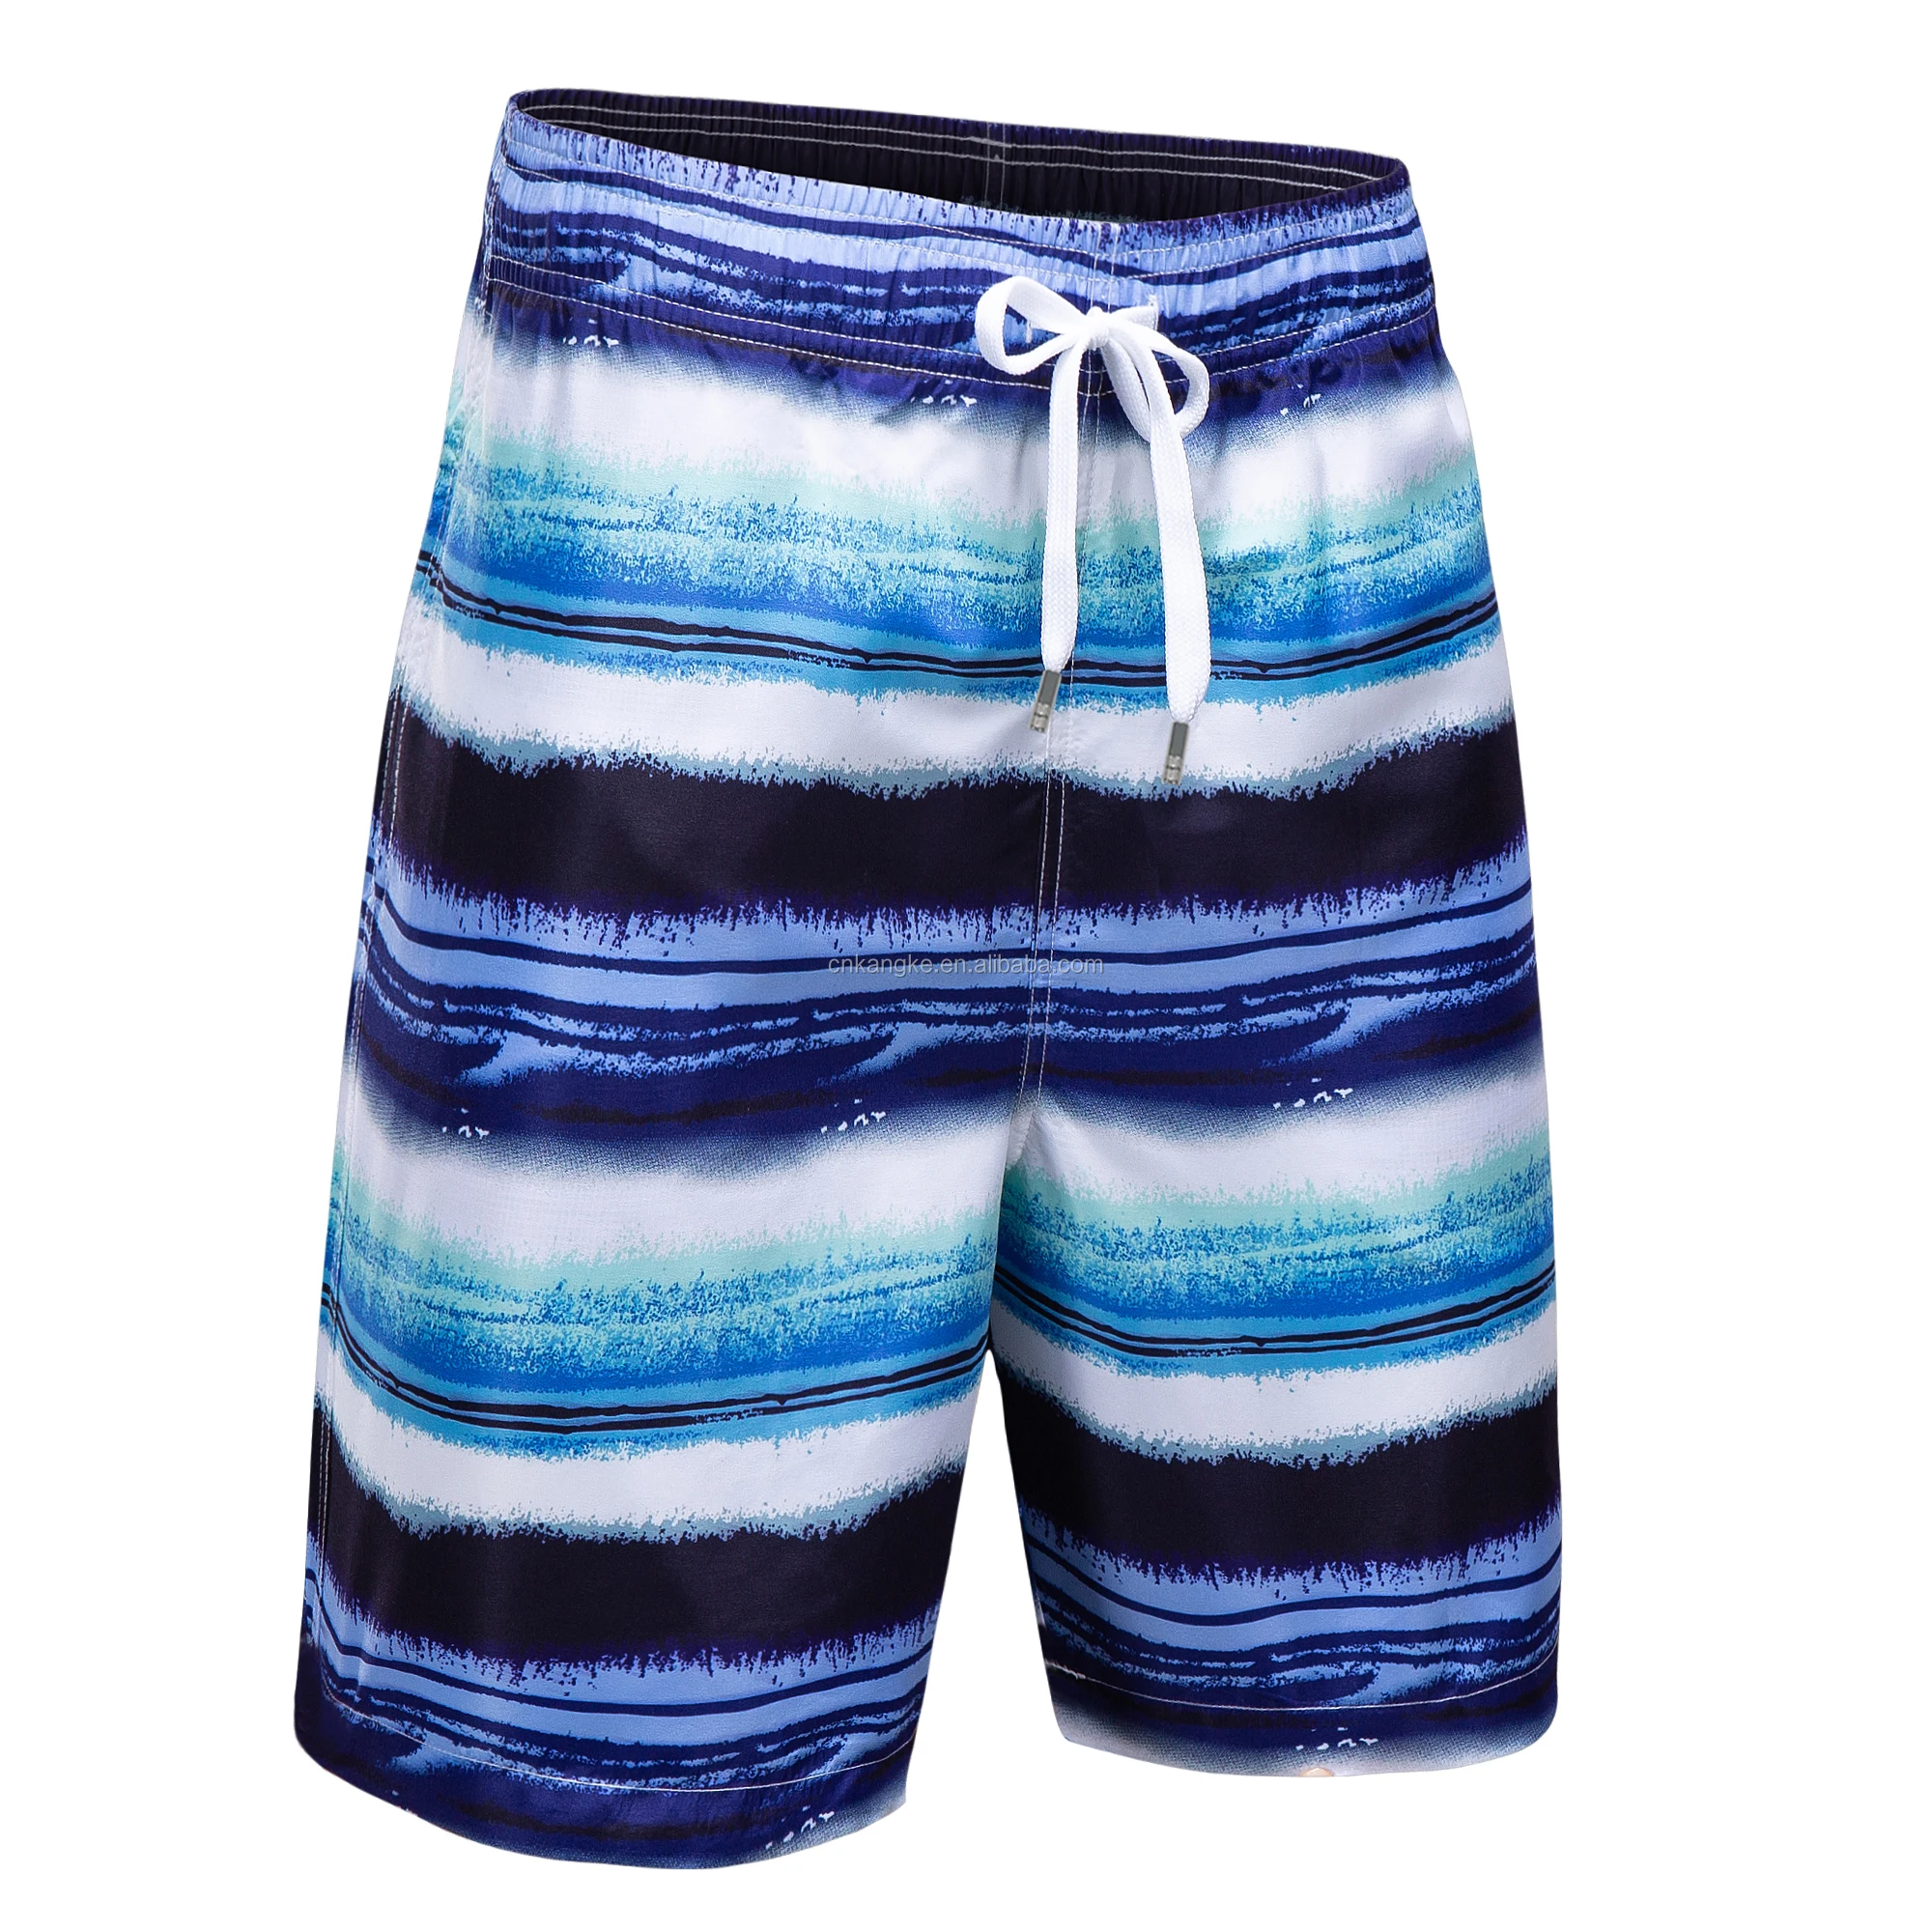 KGKE Men/'s Swim Trunks Big Size Quick Dry Fashion Print Swim Trunks and Beach Shorts Surf Shorts